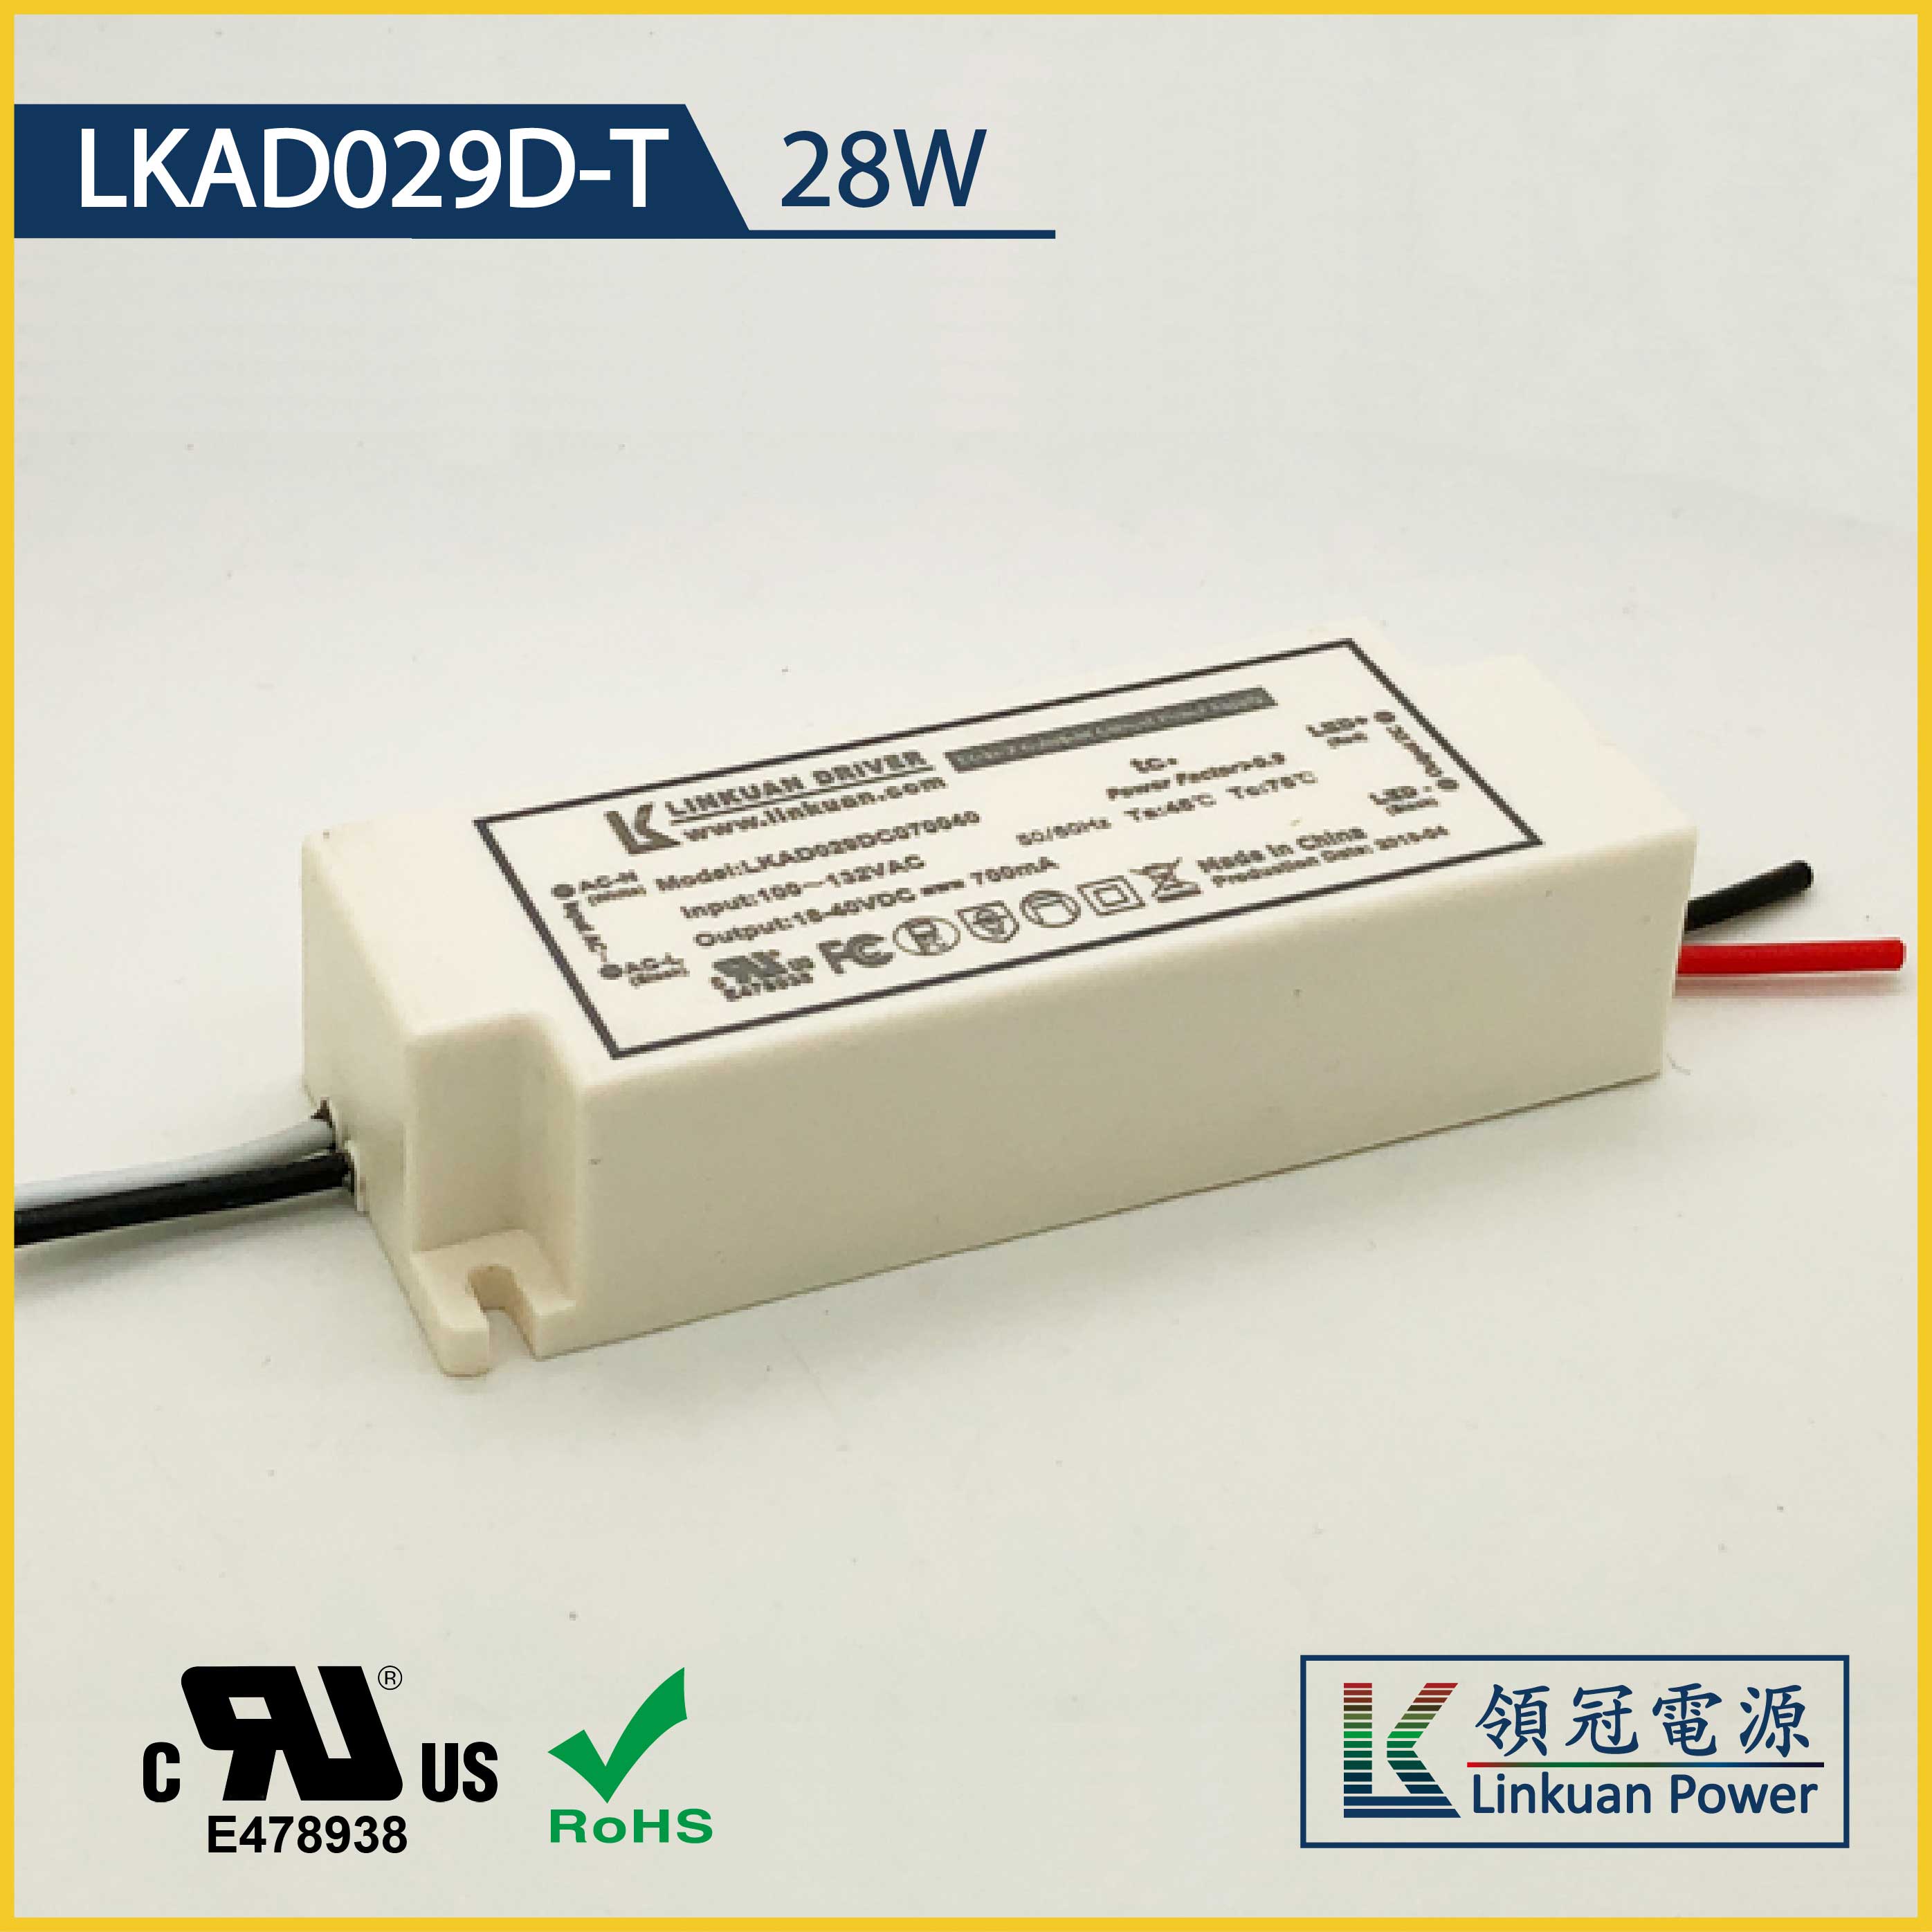 UL认证恒压可控硅调光电源LKAD029DV250012T